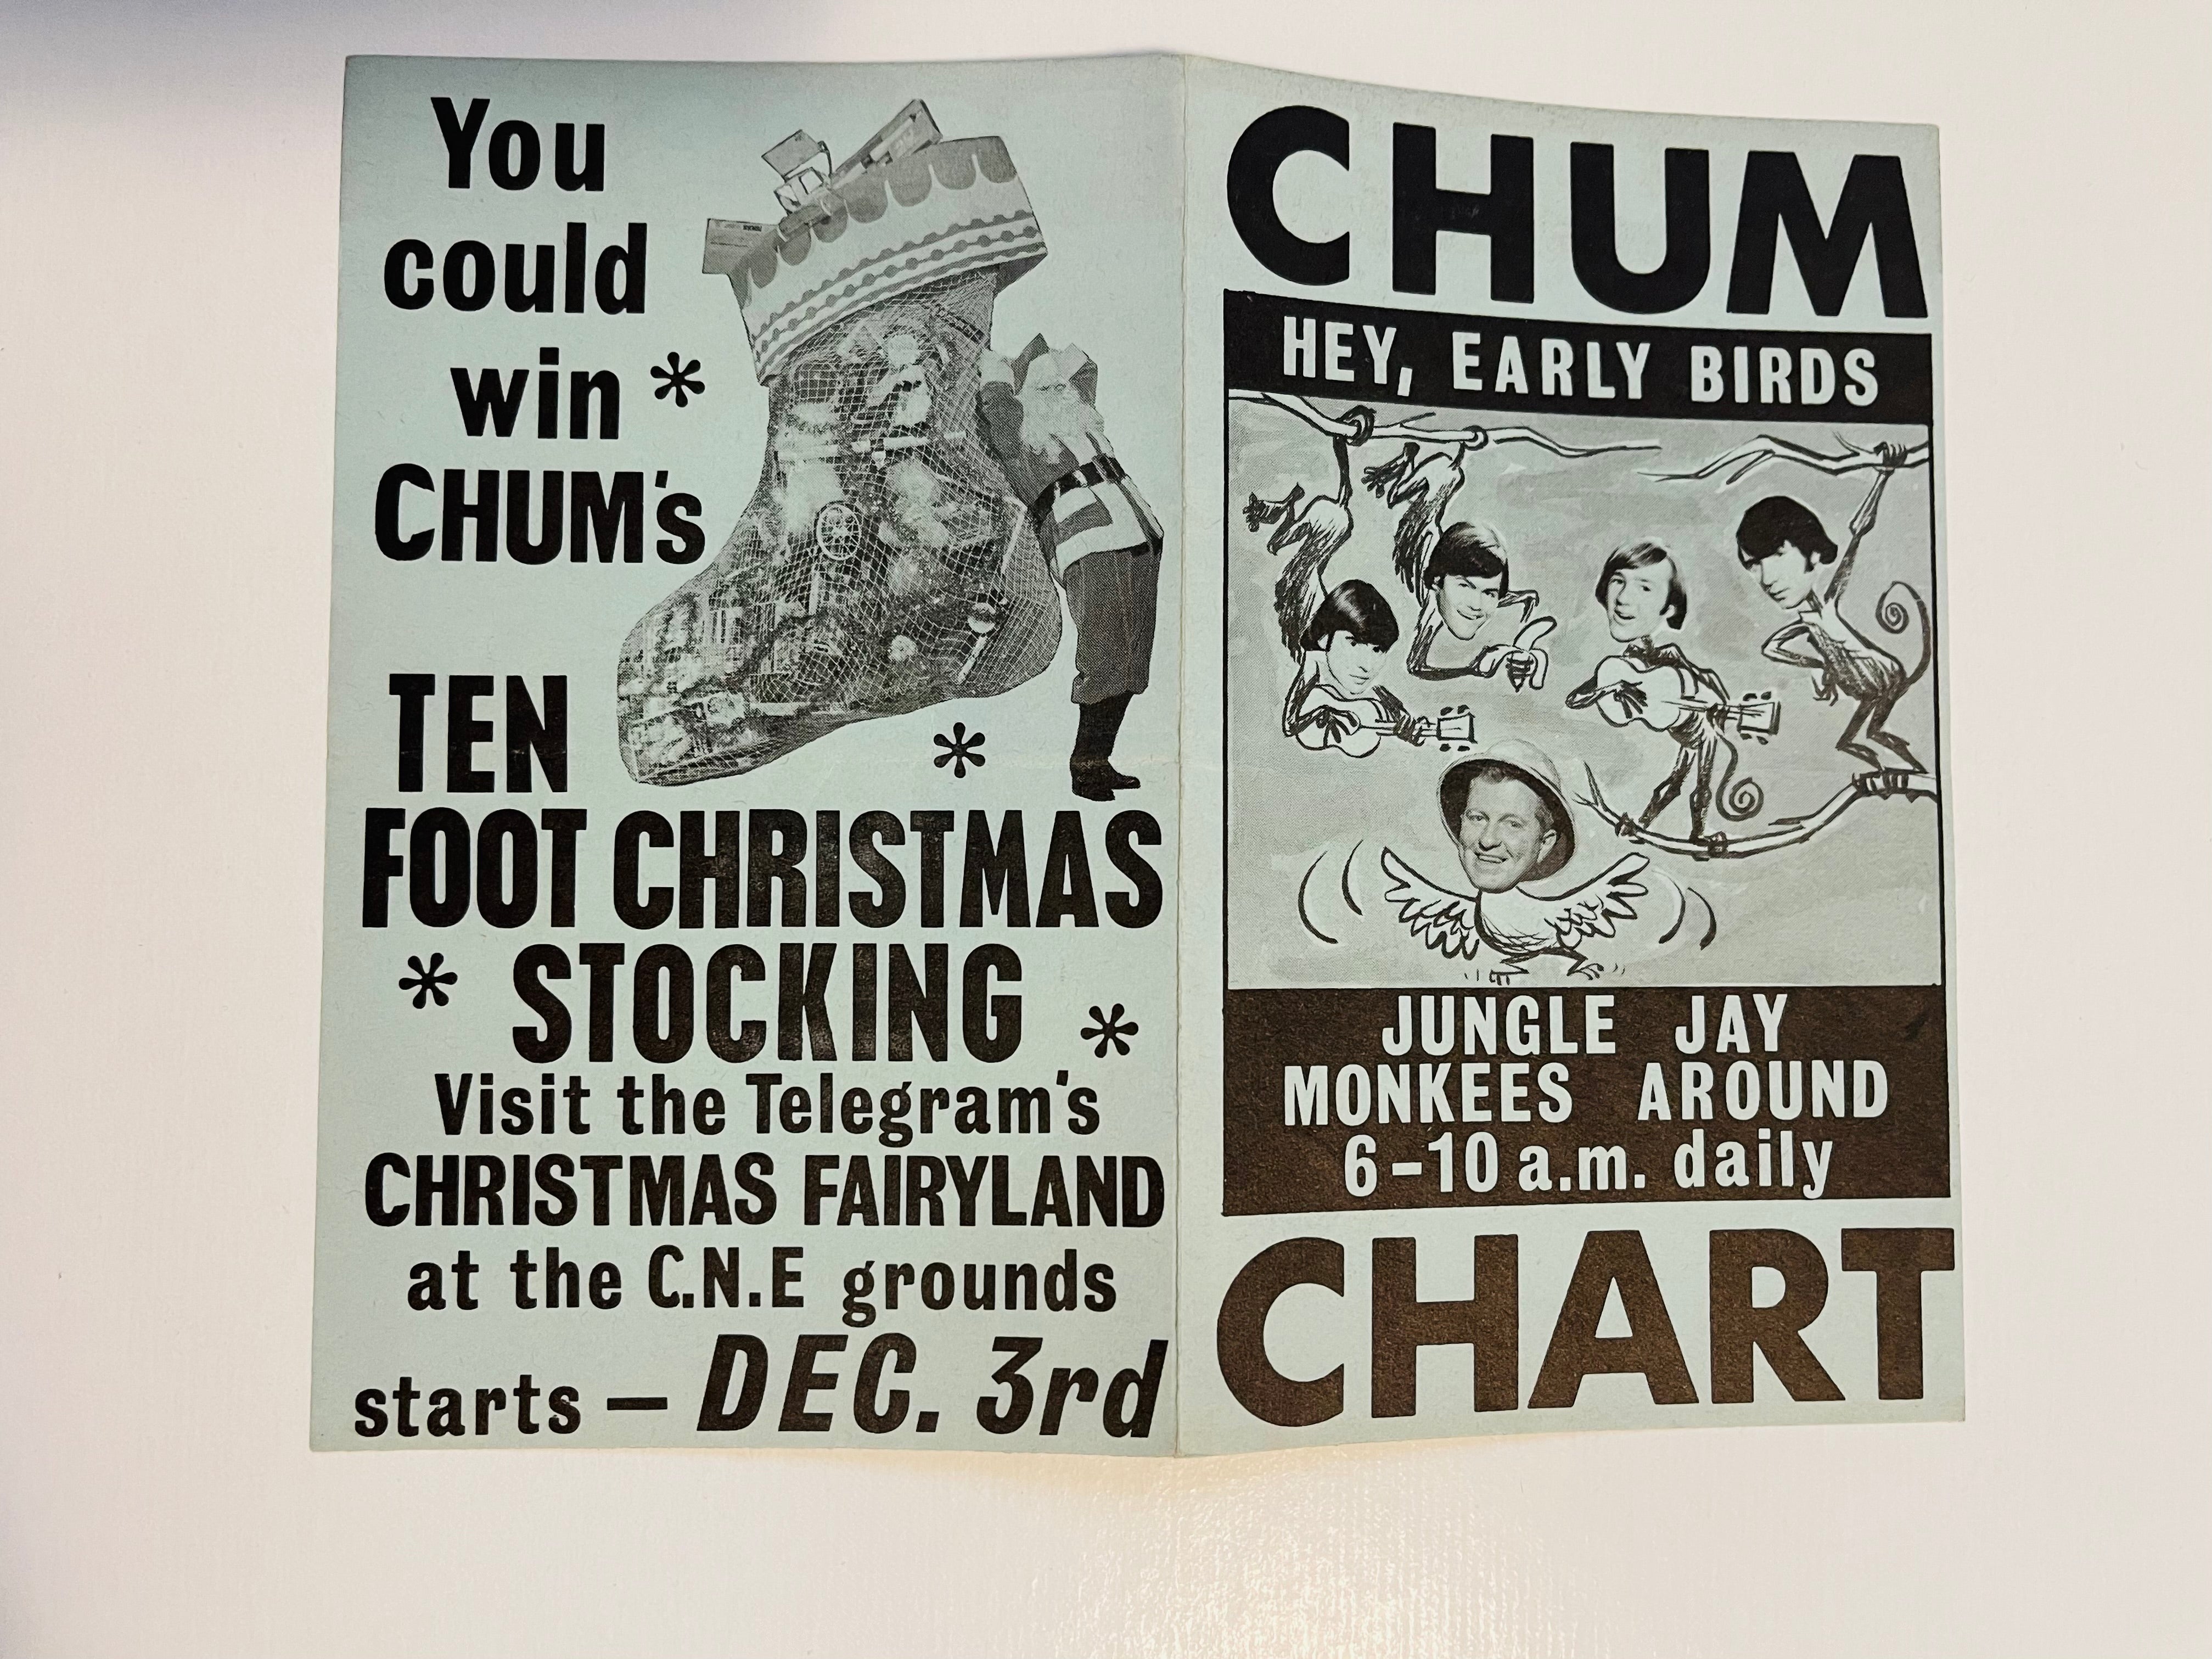 Monkees Chum chart November, 1966